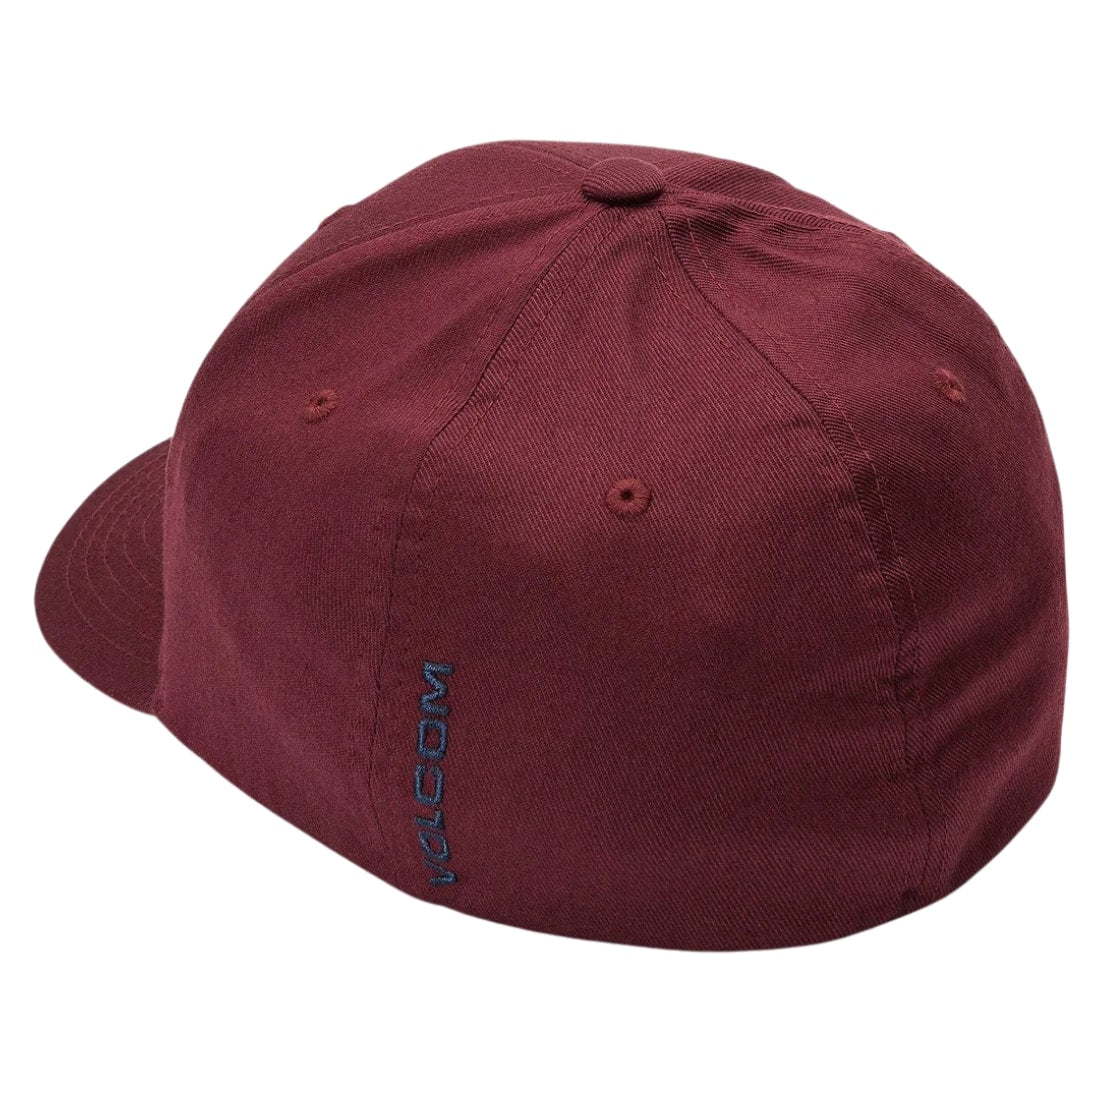 Volcom Stone Flexfit Cap Hat - Bordeaux Brown - Baseball Cap by Volcom